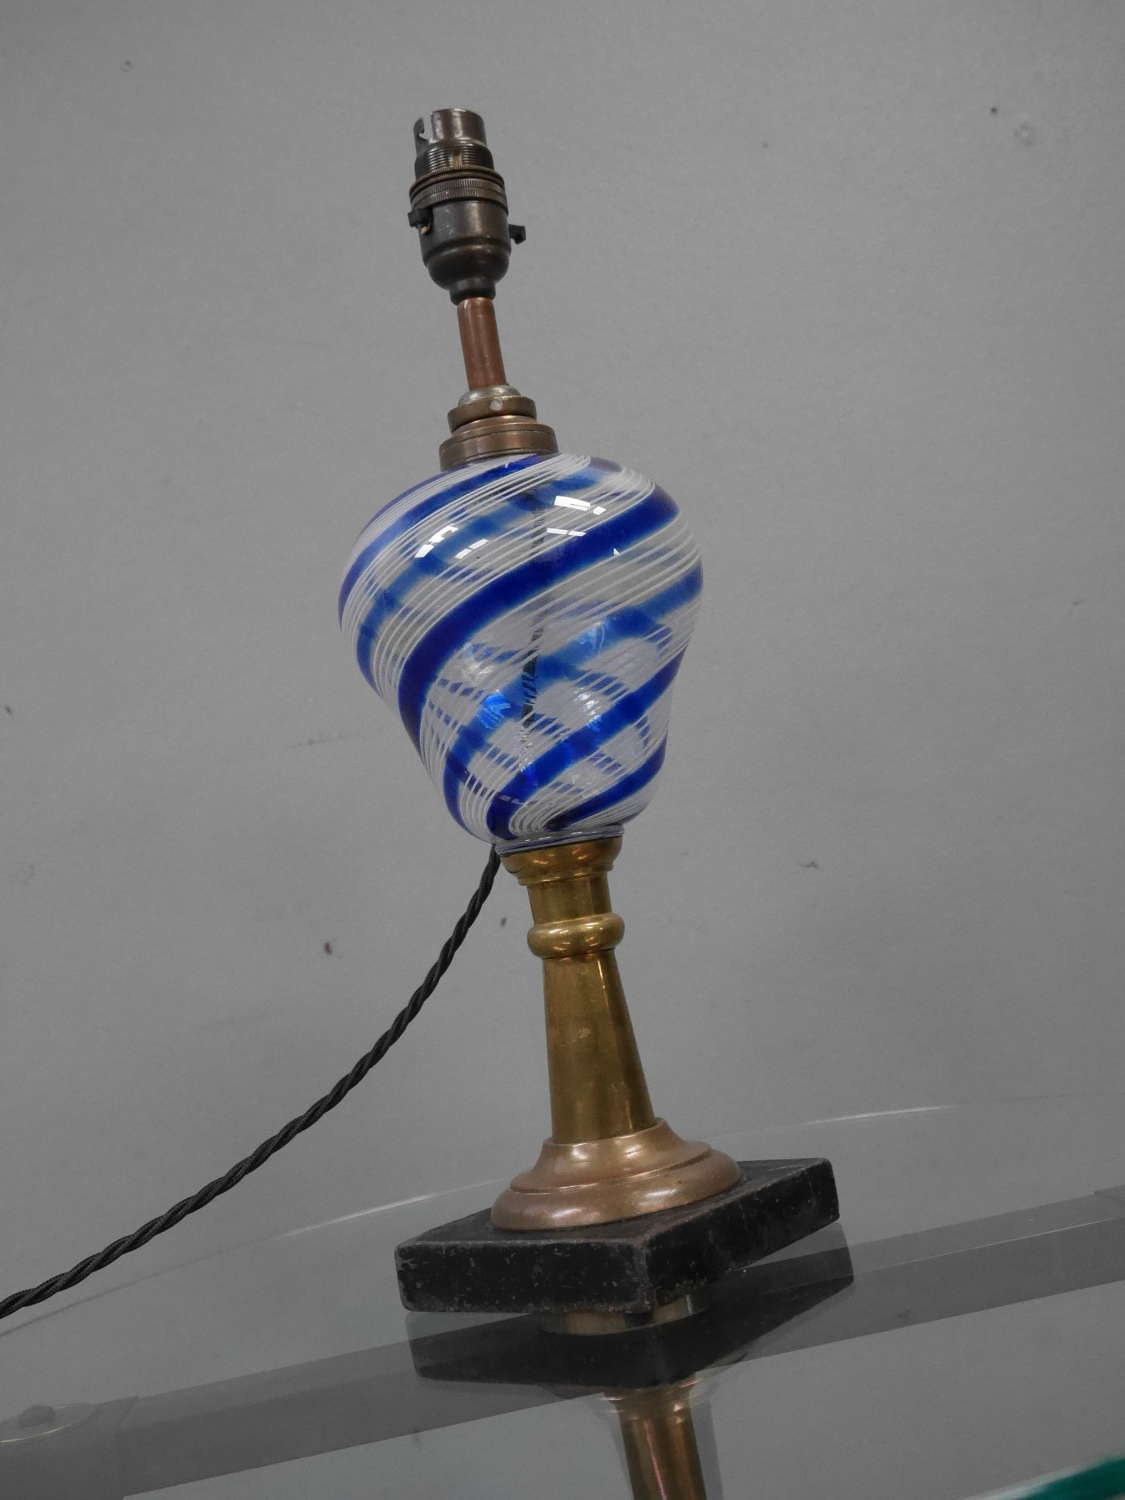 19th Century Table Lamp